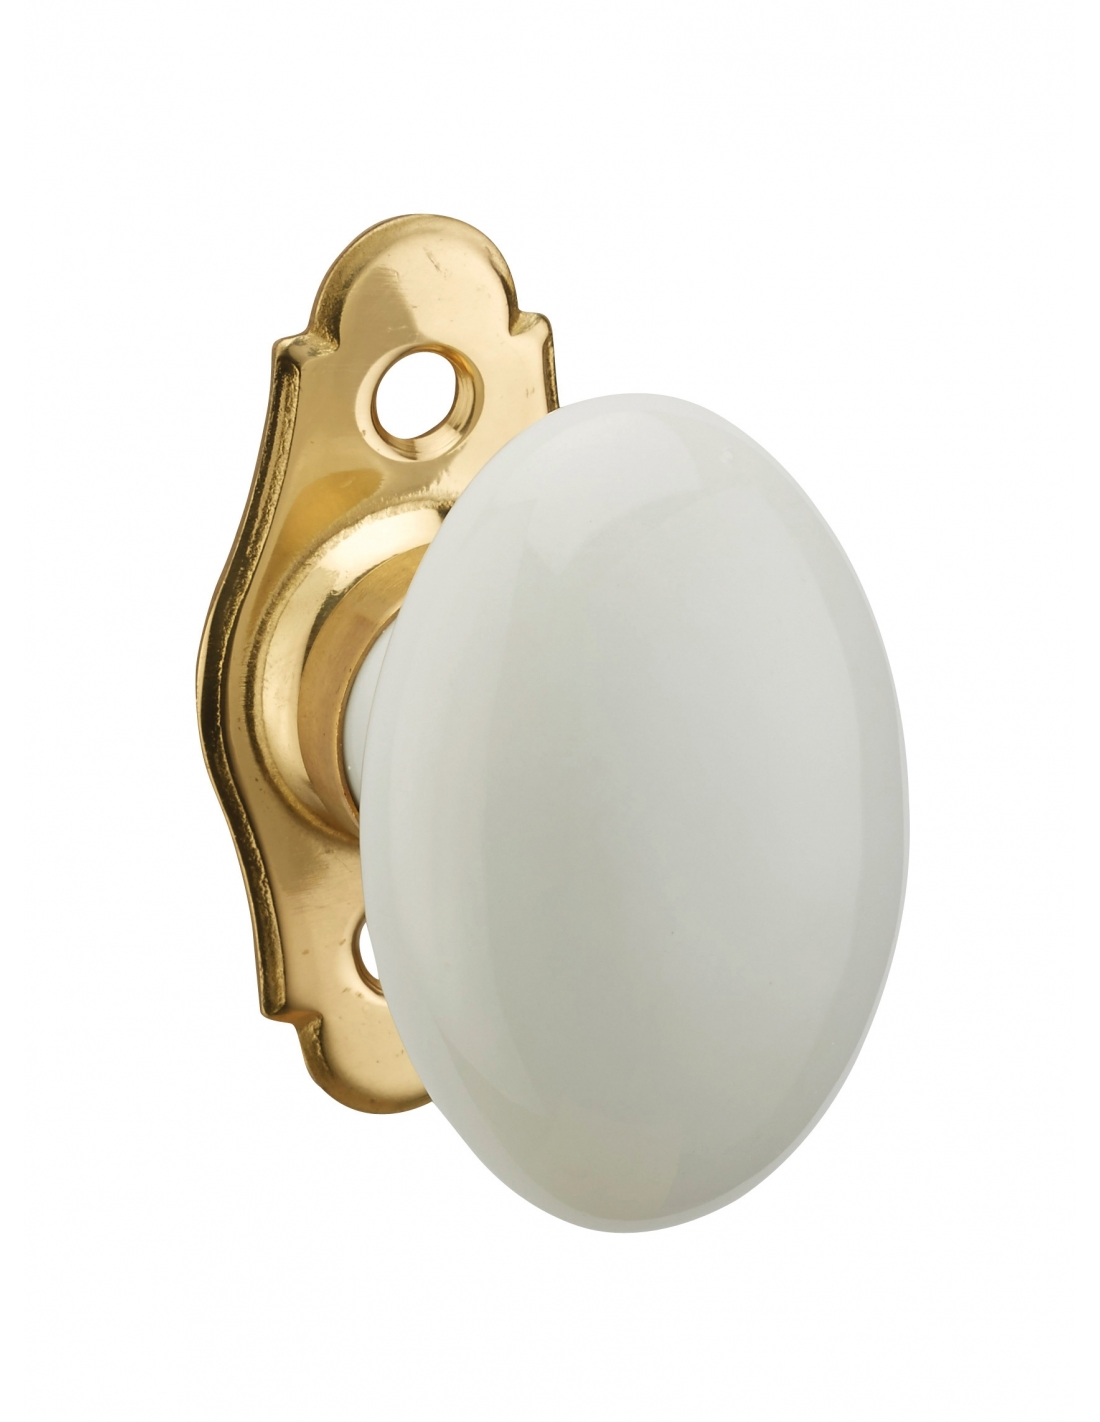 Window handle, porcelain knob on brass plate, with screw